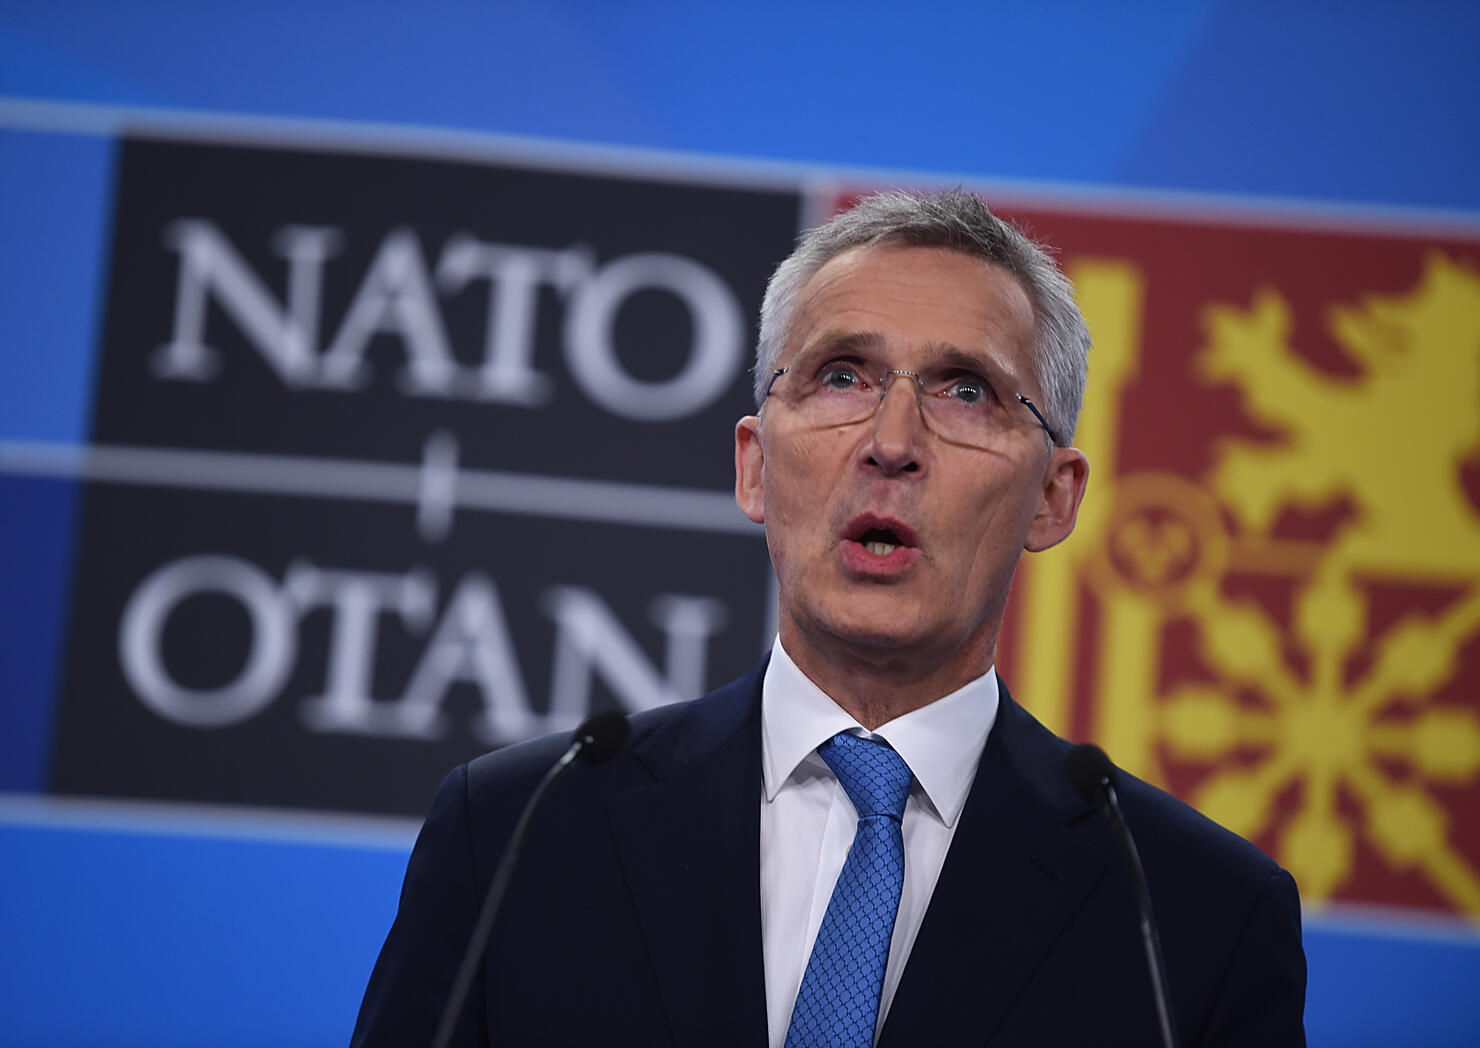 World Leaders Convene In Madrid For Key NATO Summit